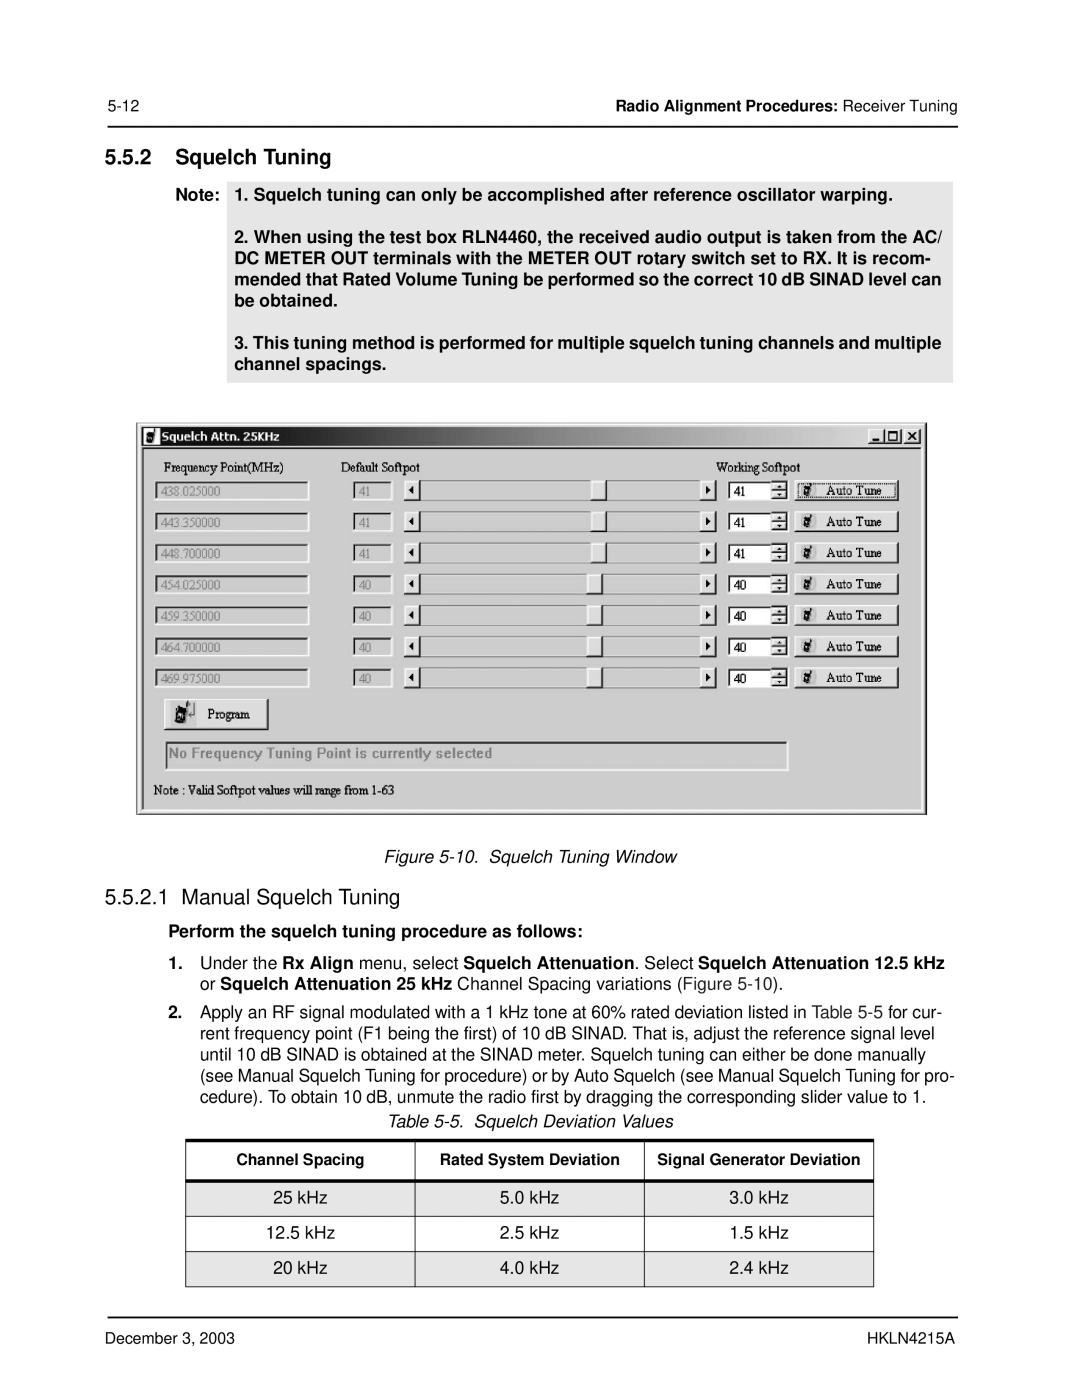 Motorola EP450 service manual Manual Squelch Tuning 